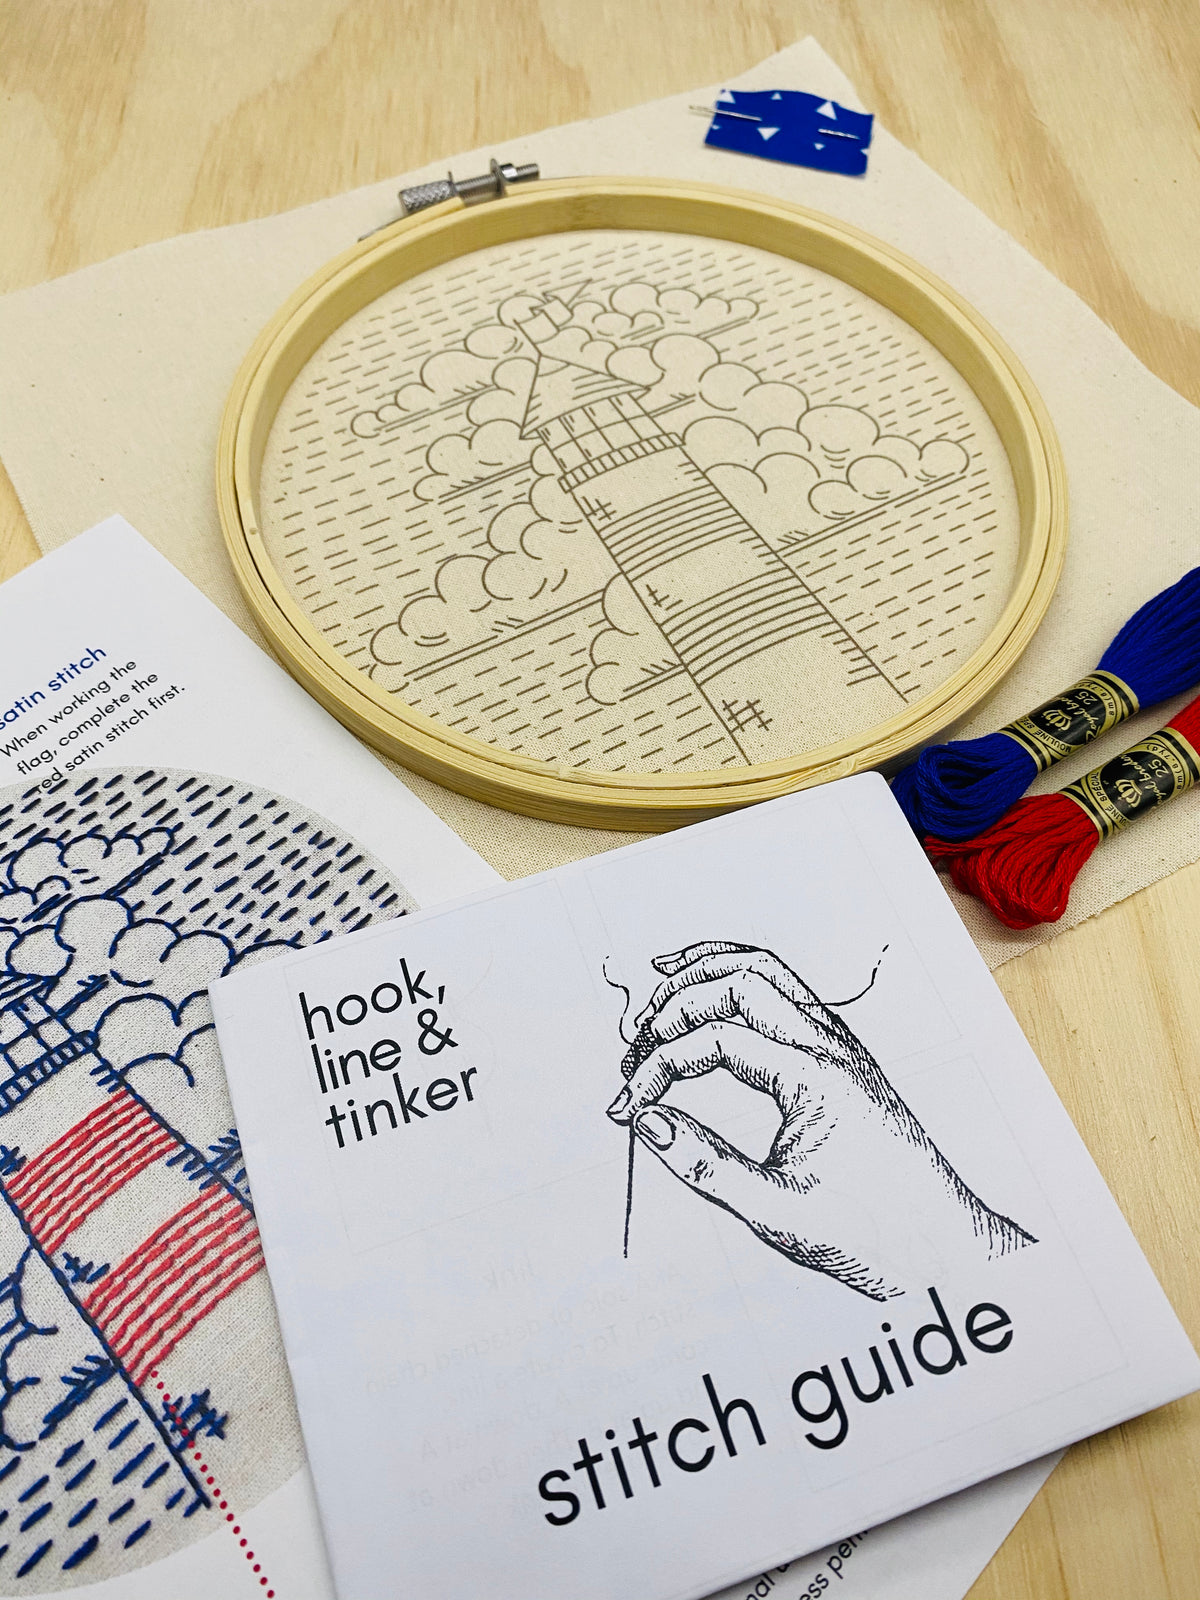 Lighthouse Embroidery Kit  |  Hook, Line &amp; Tinker